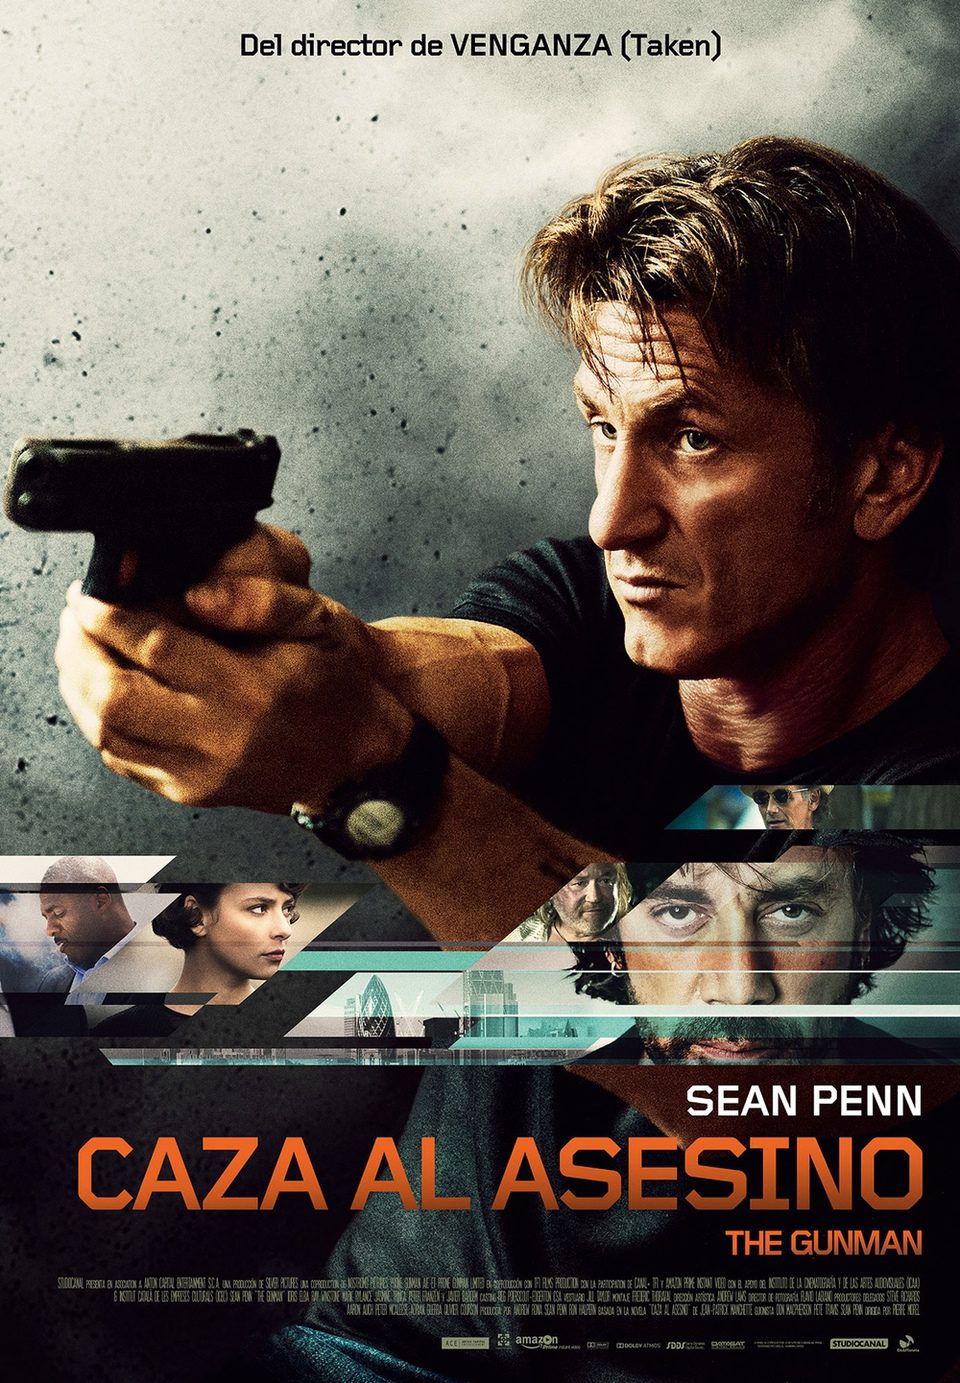 The Gunman - Caza al Asesino (0148)